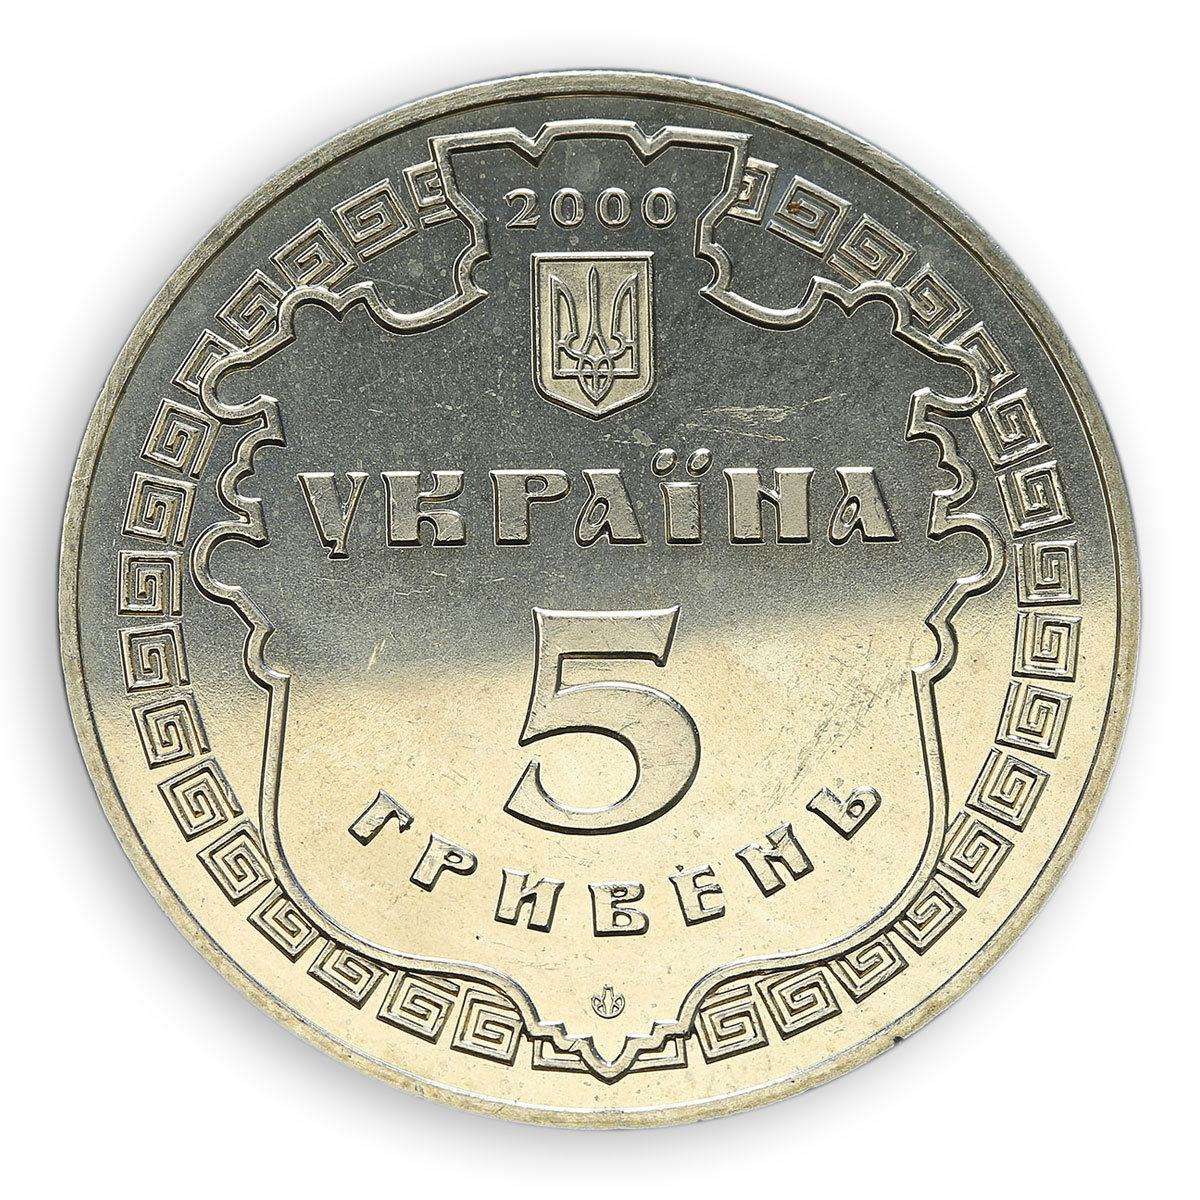 Ukraine 5 hryvnia 2500 years Bilhorod-Dnistrovskyi Ancient City nickel coin 2000